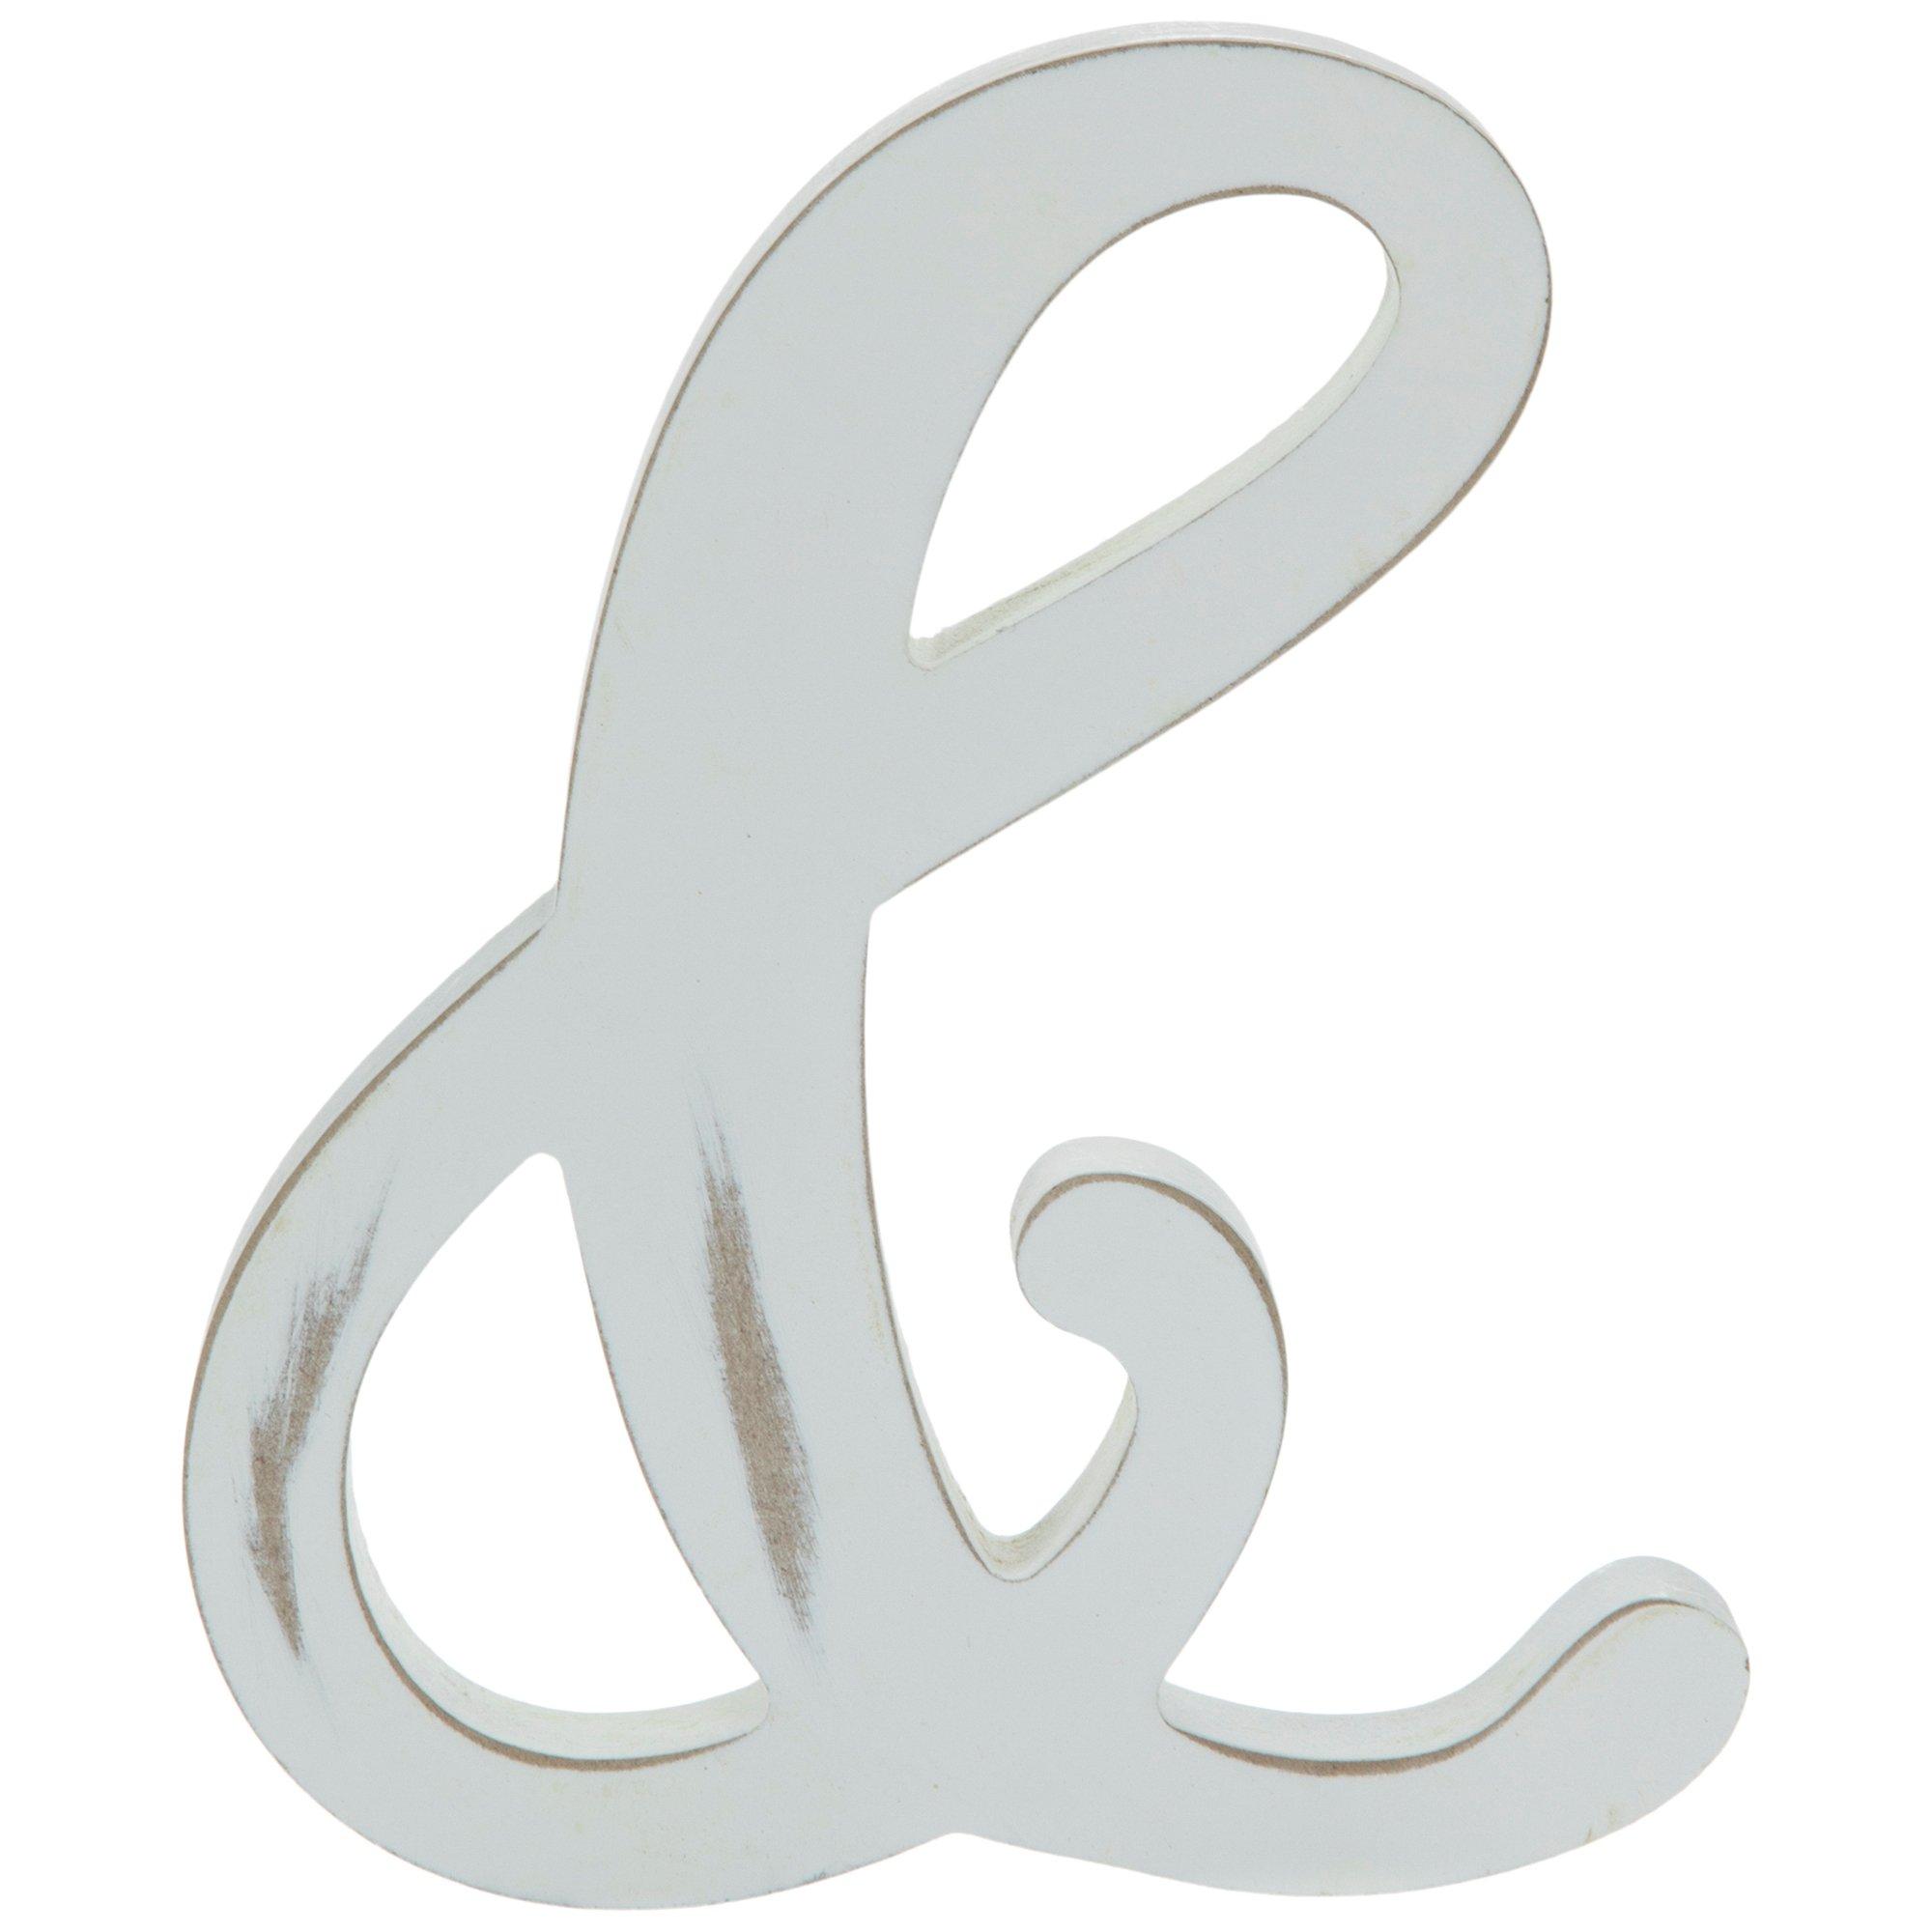  Ampersand Symbol, White Wood, 9 inches, Mardel